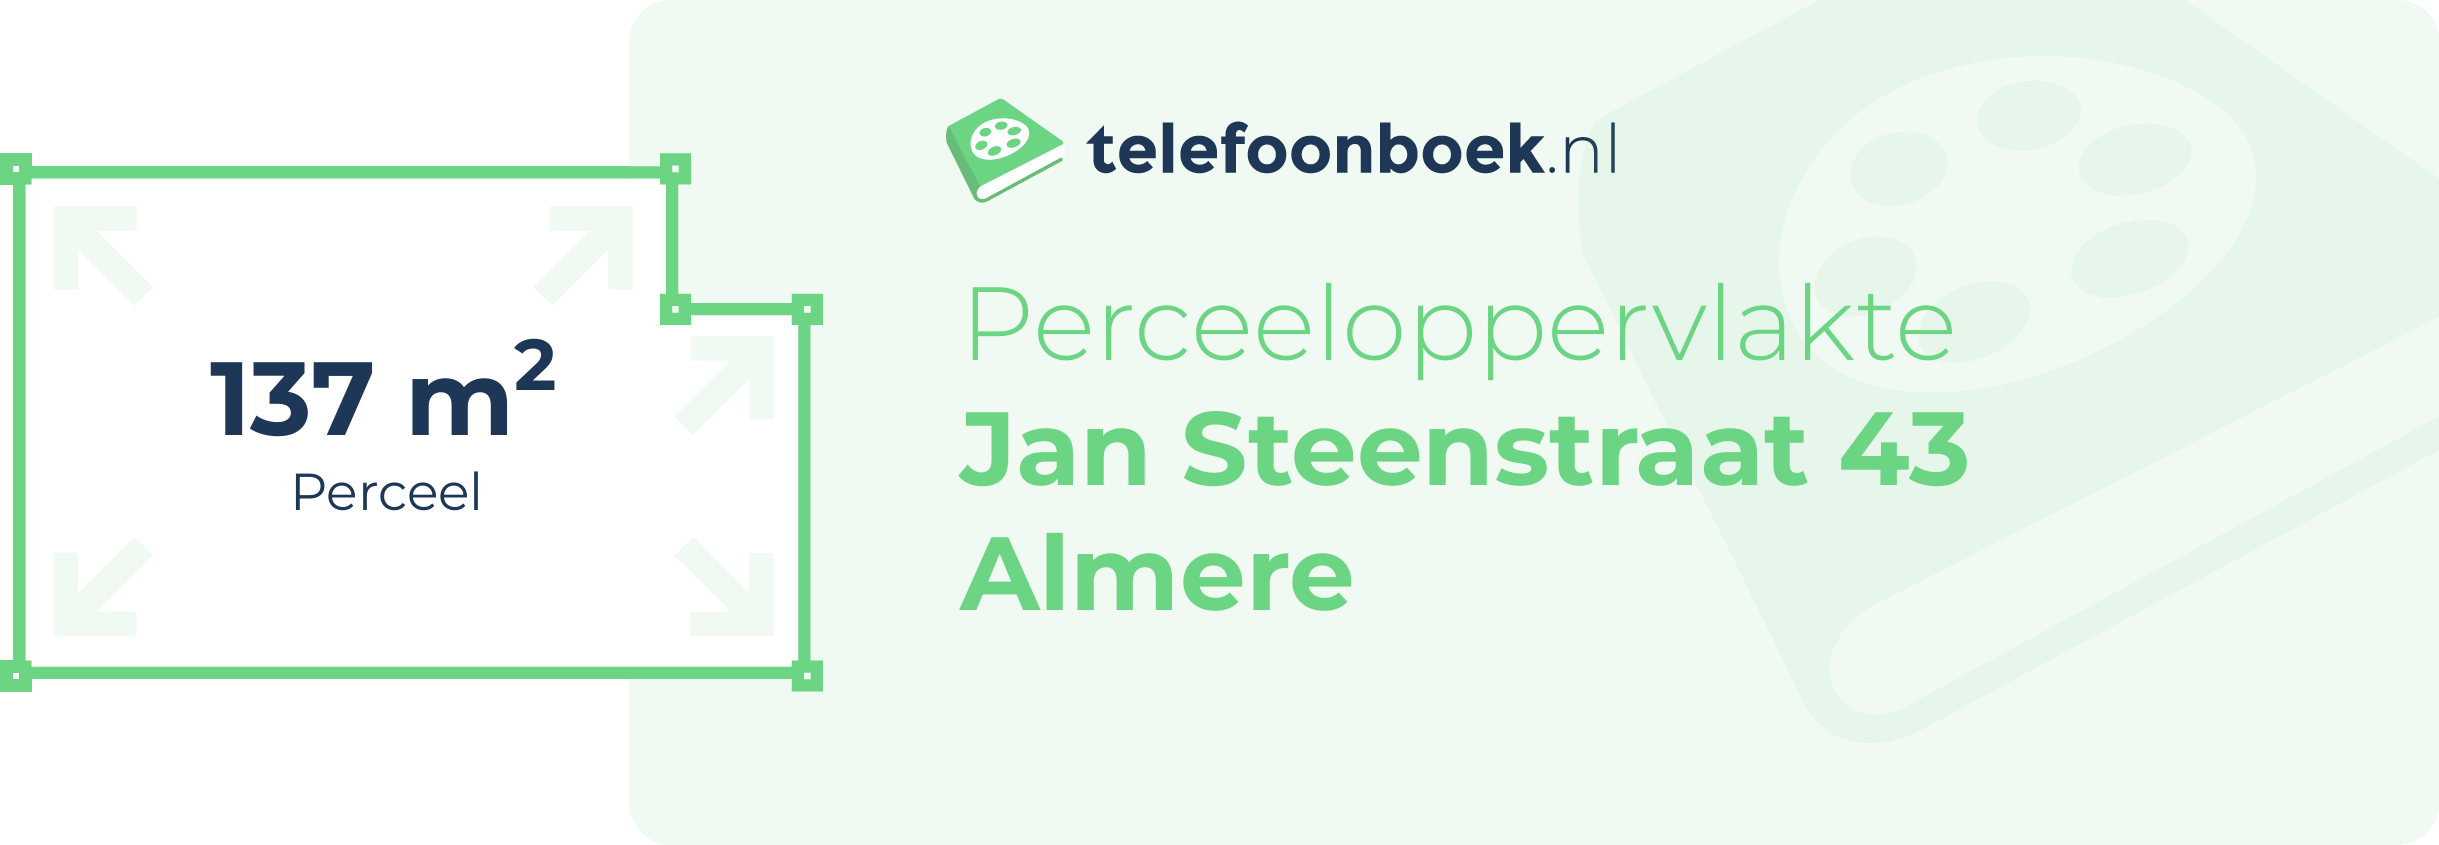 Perceeloppervlakte Jan Steenstraat 43 Almere